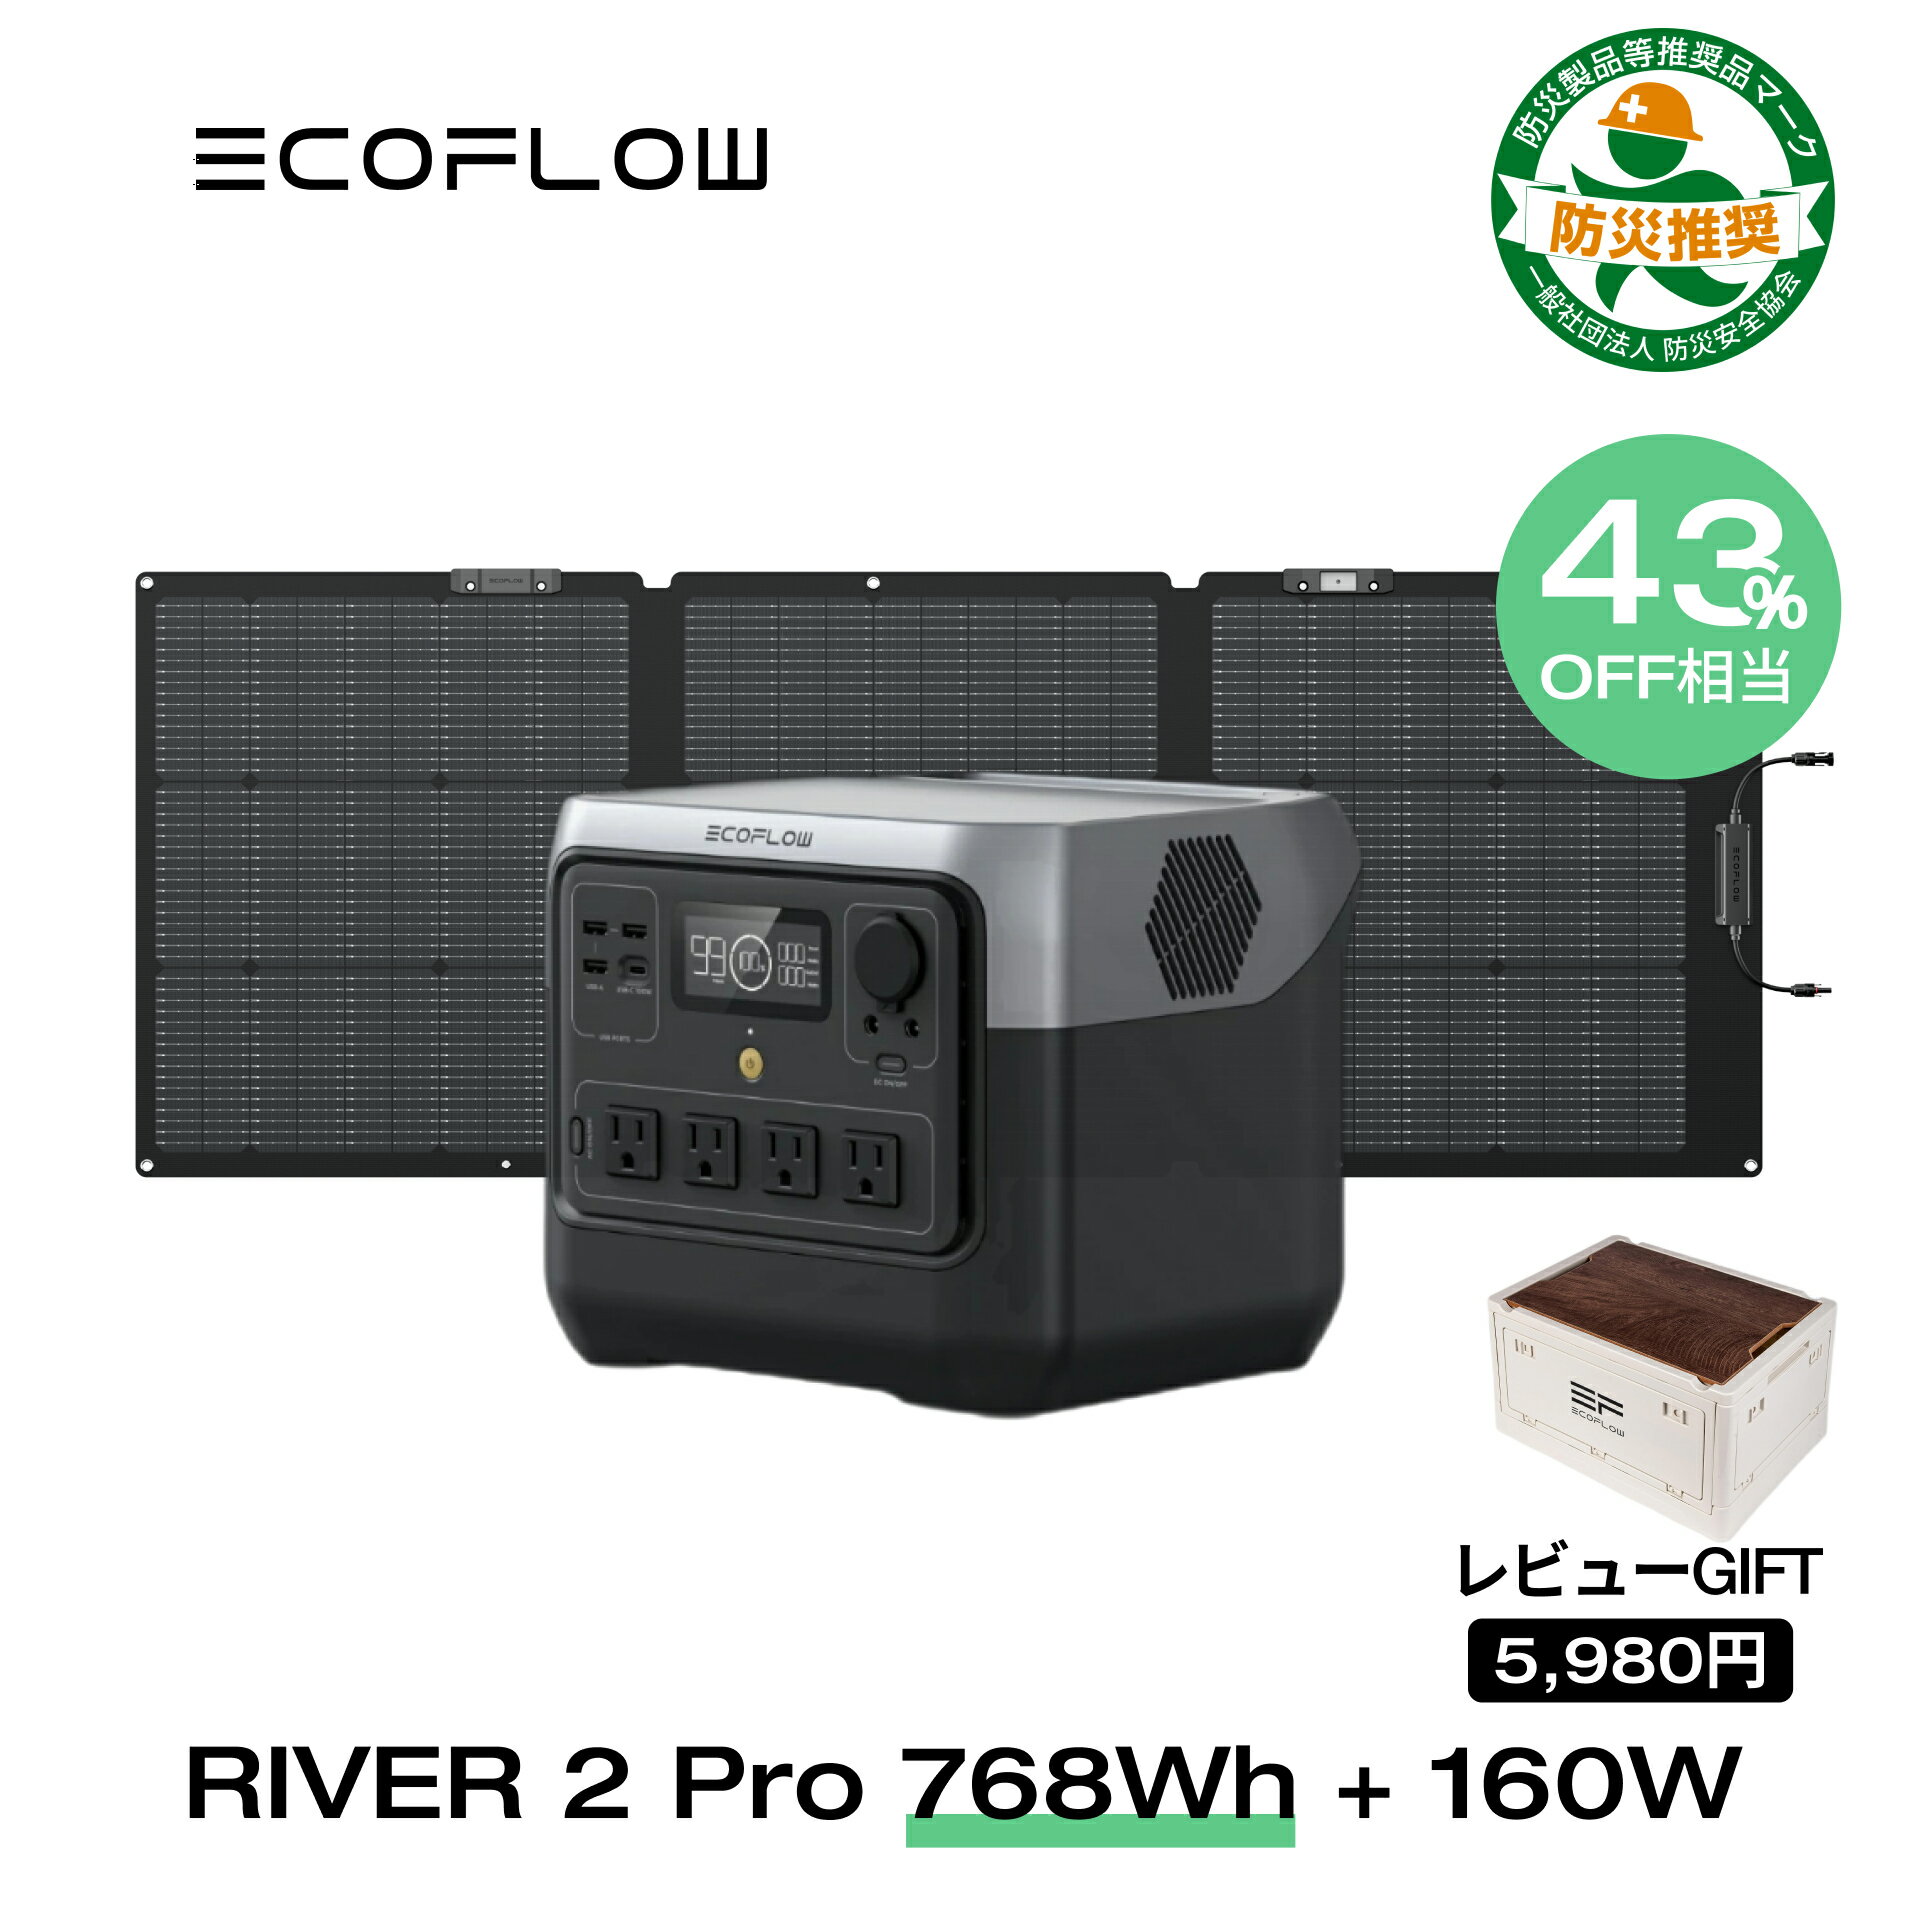 EcoFlow RIVER 2 Pro 768Wh + 160W ポータブル電源 ソーラーパネル